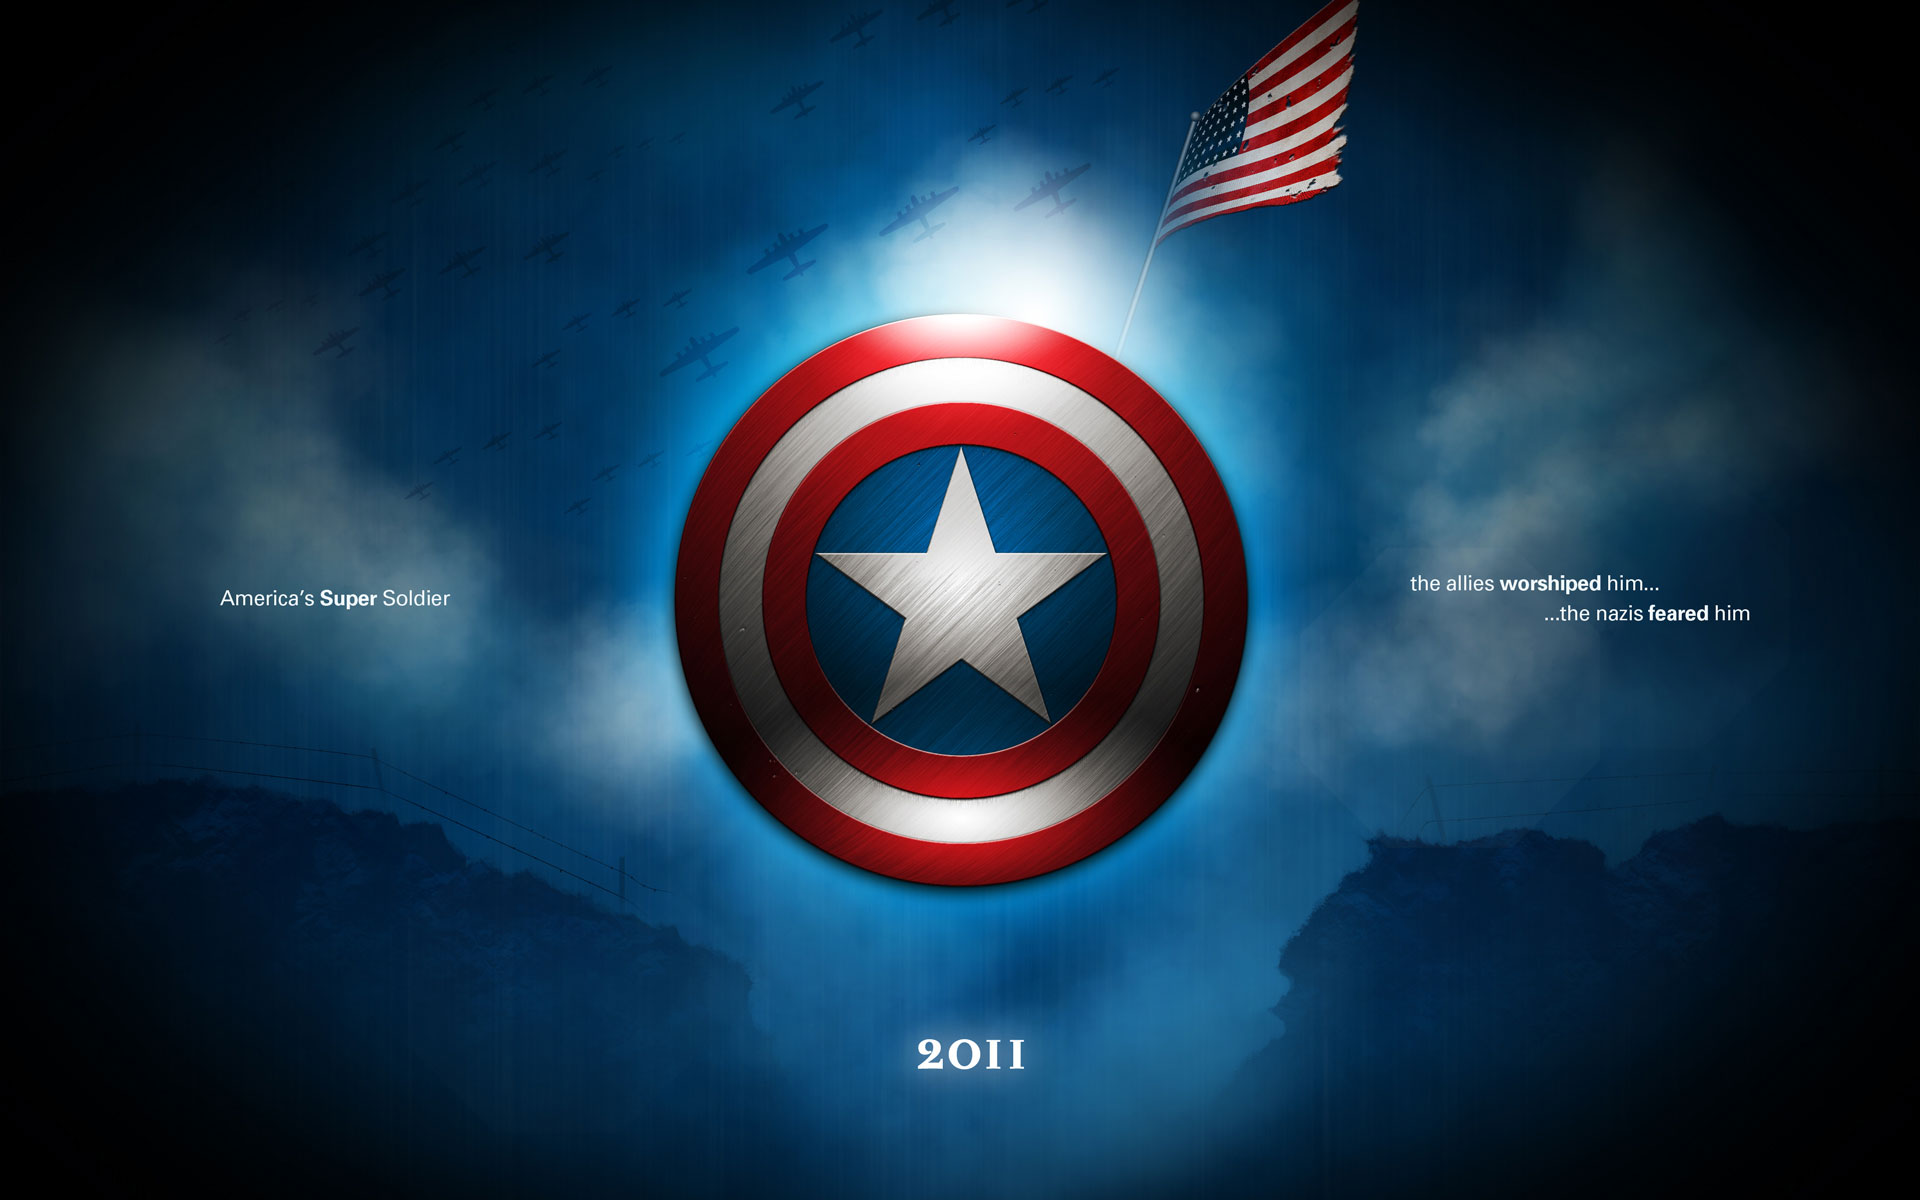 Captain Marvel Logo Wallpapers